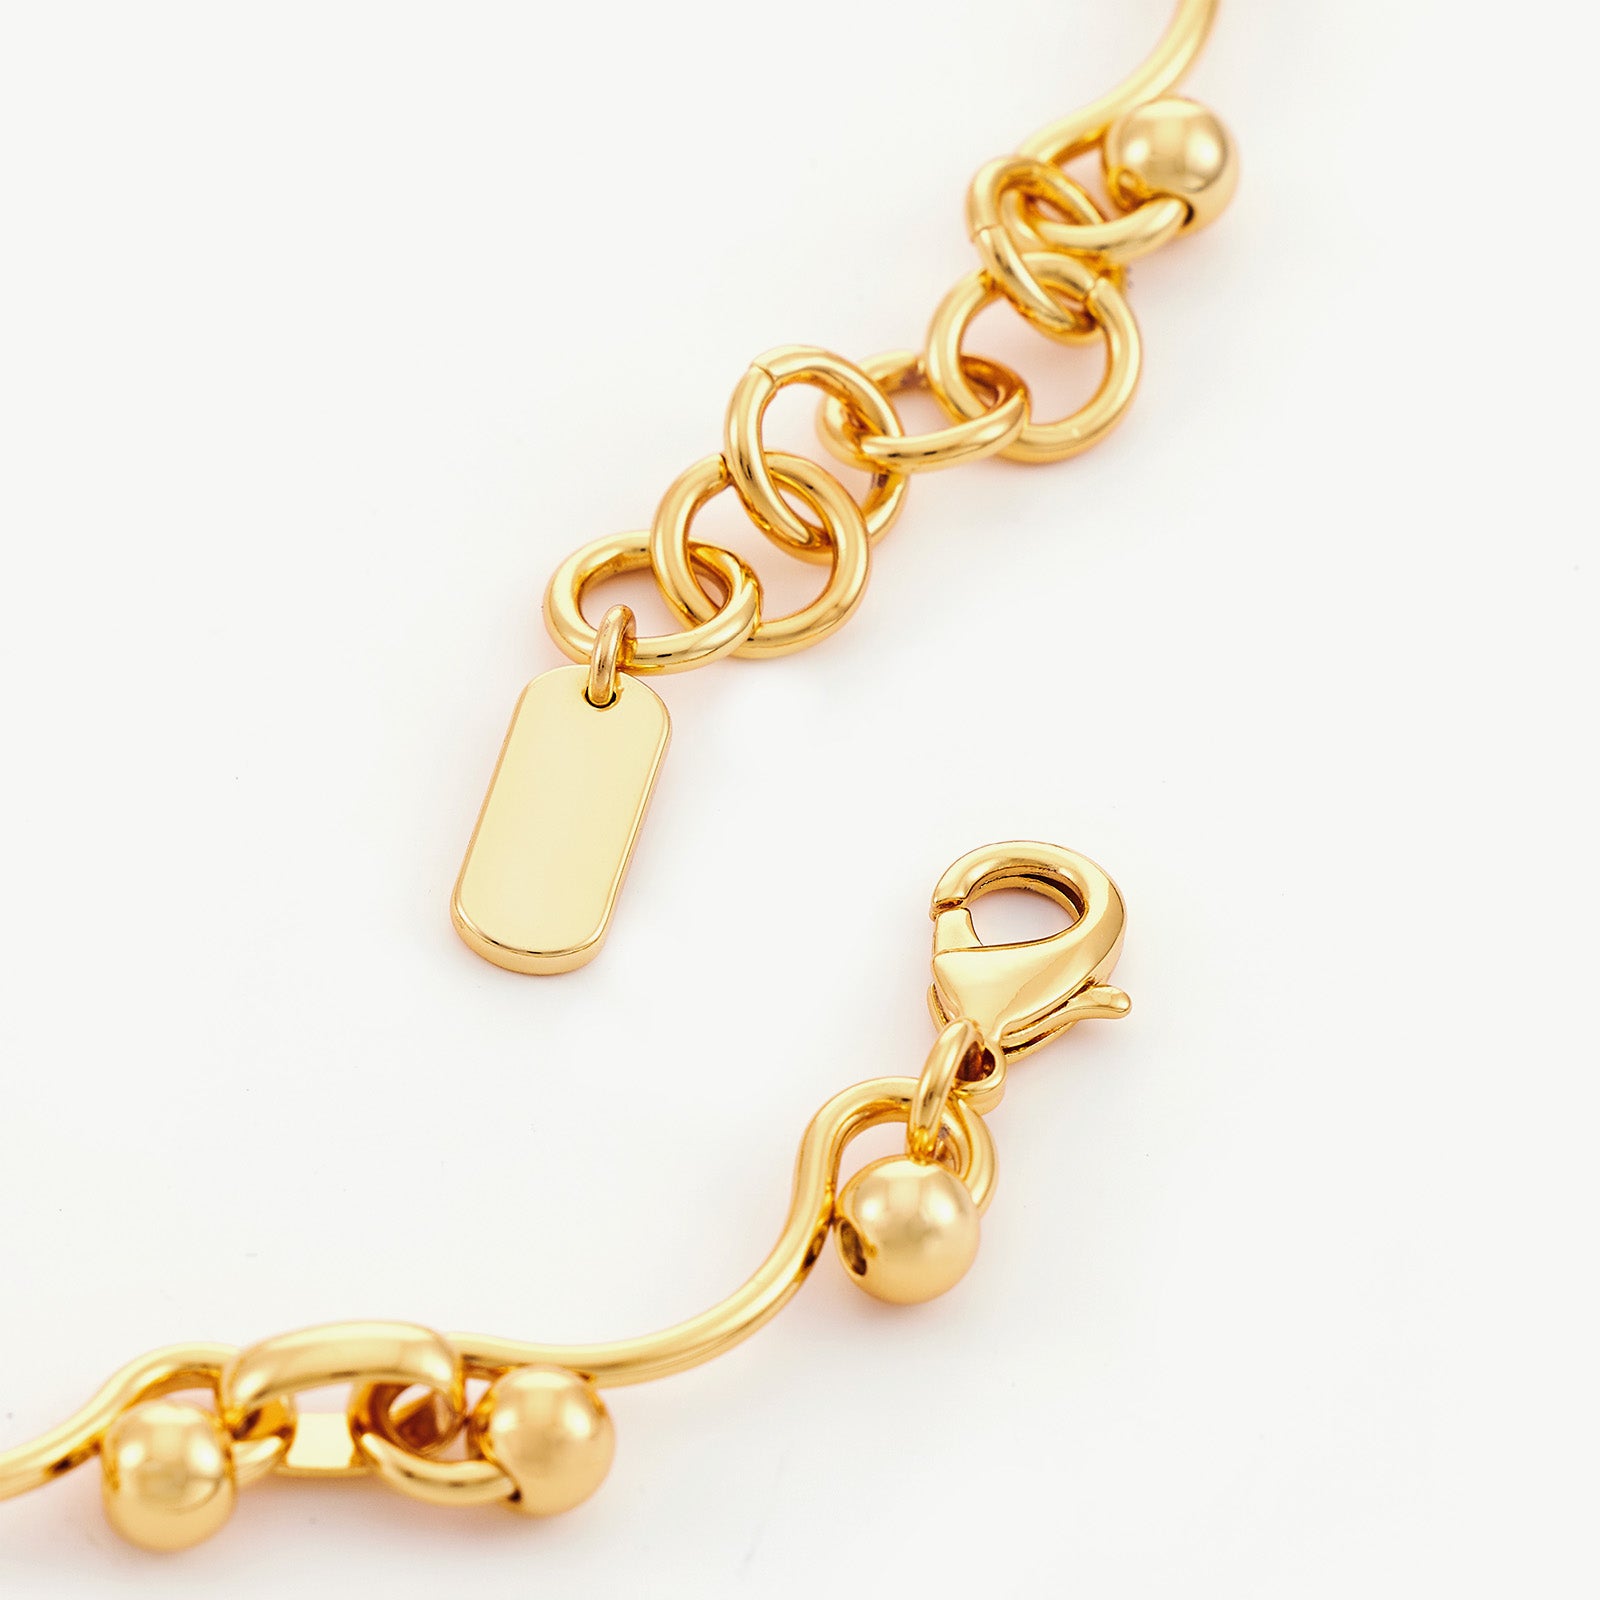 Twisted Chain Necklace| C.Paravano